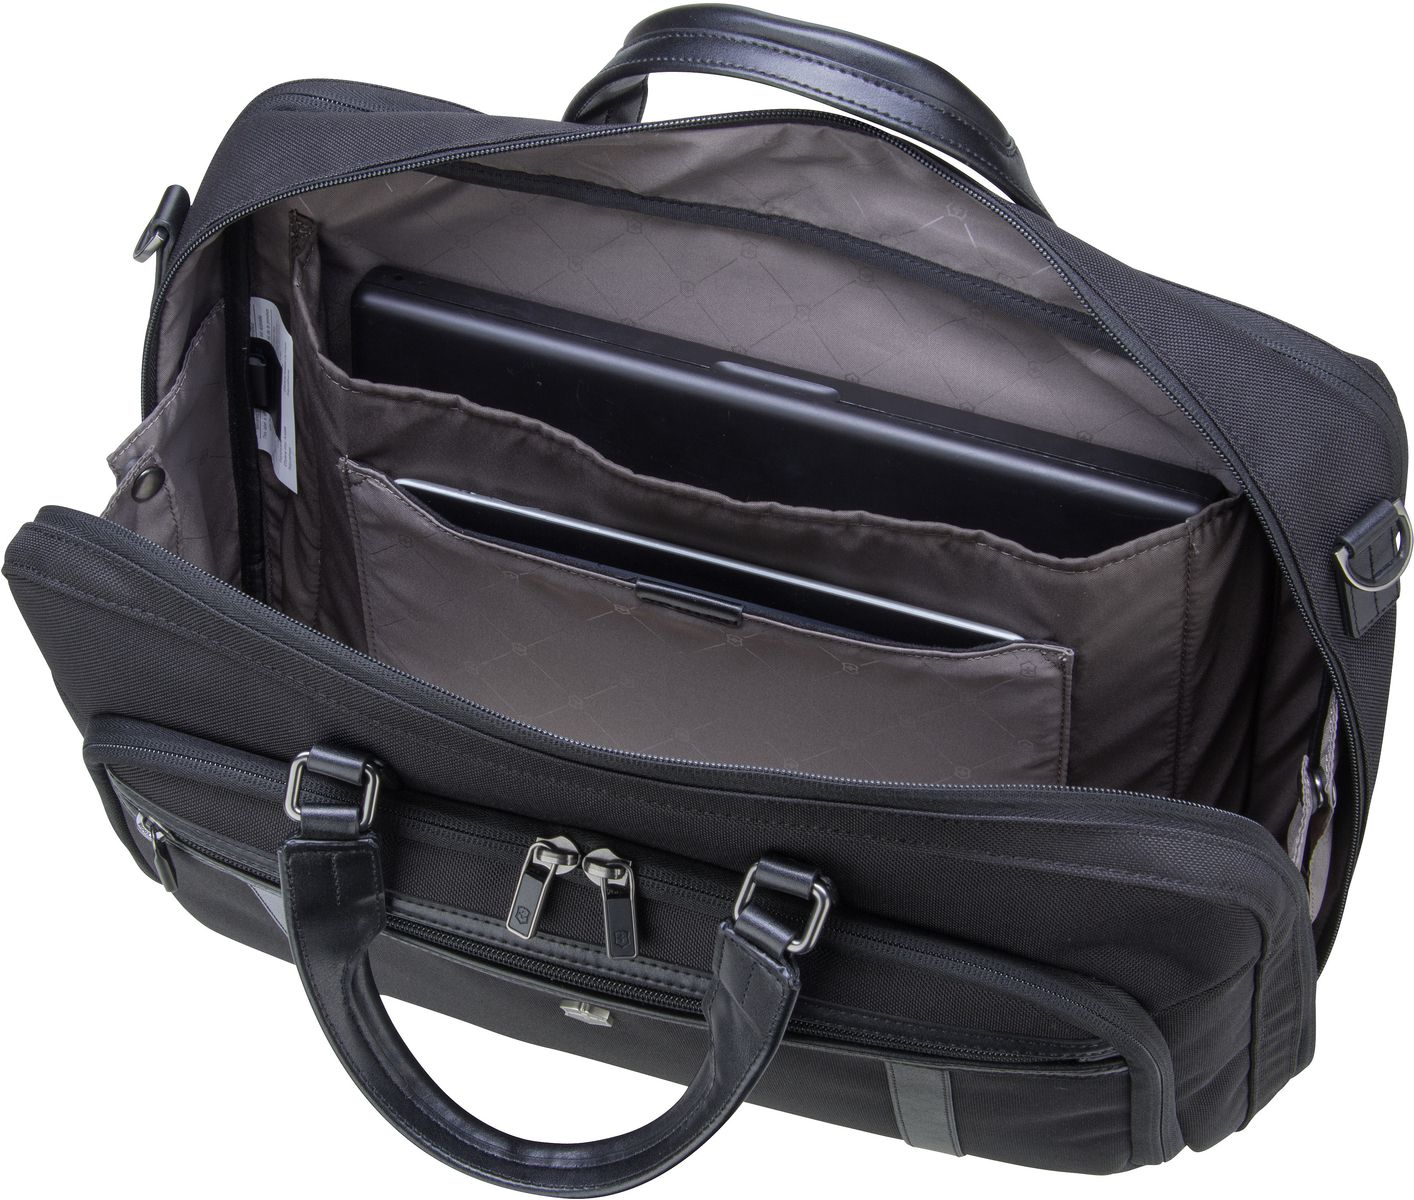 Victorinox Werks Professional Cordura 2-Way Carry Laptop Bag - Black